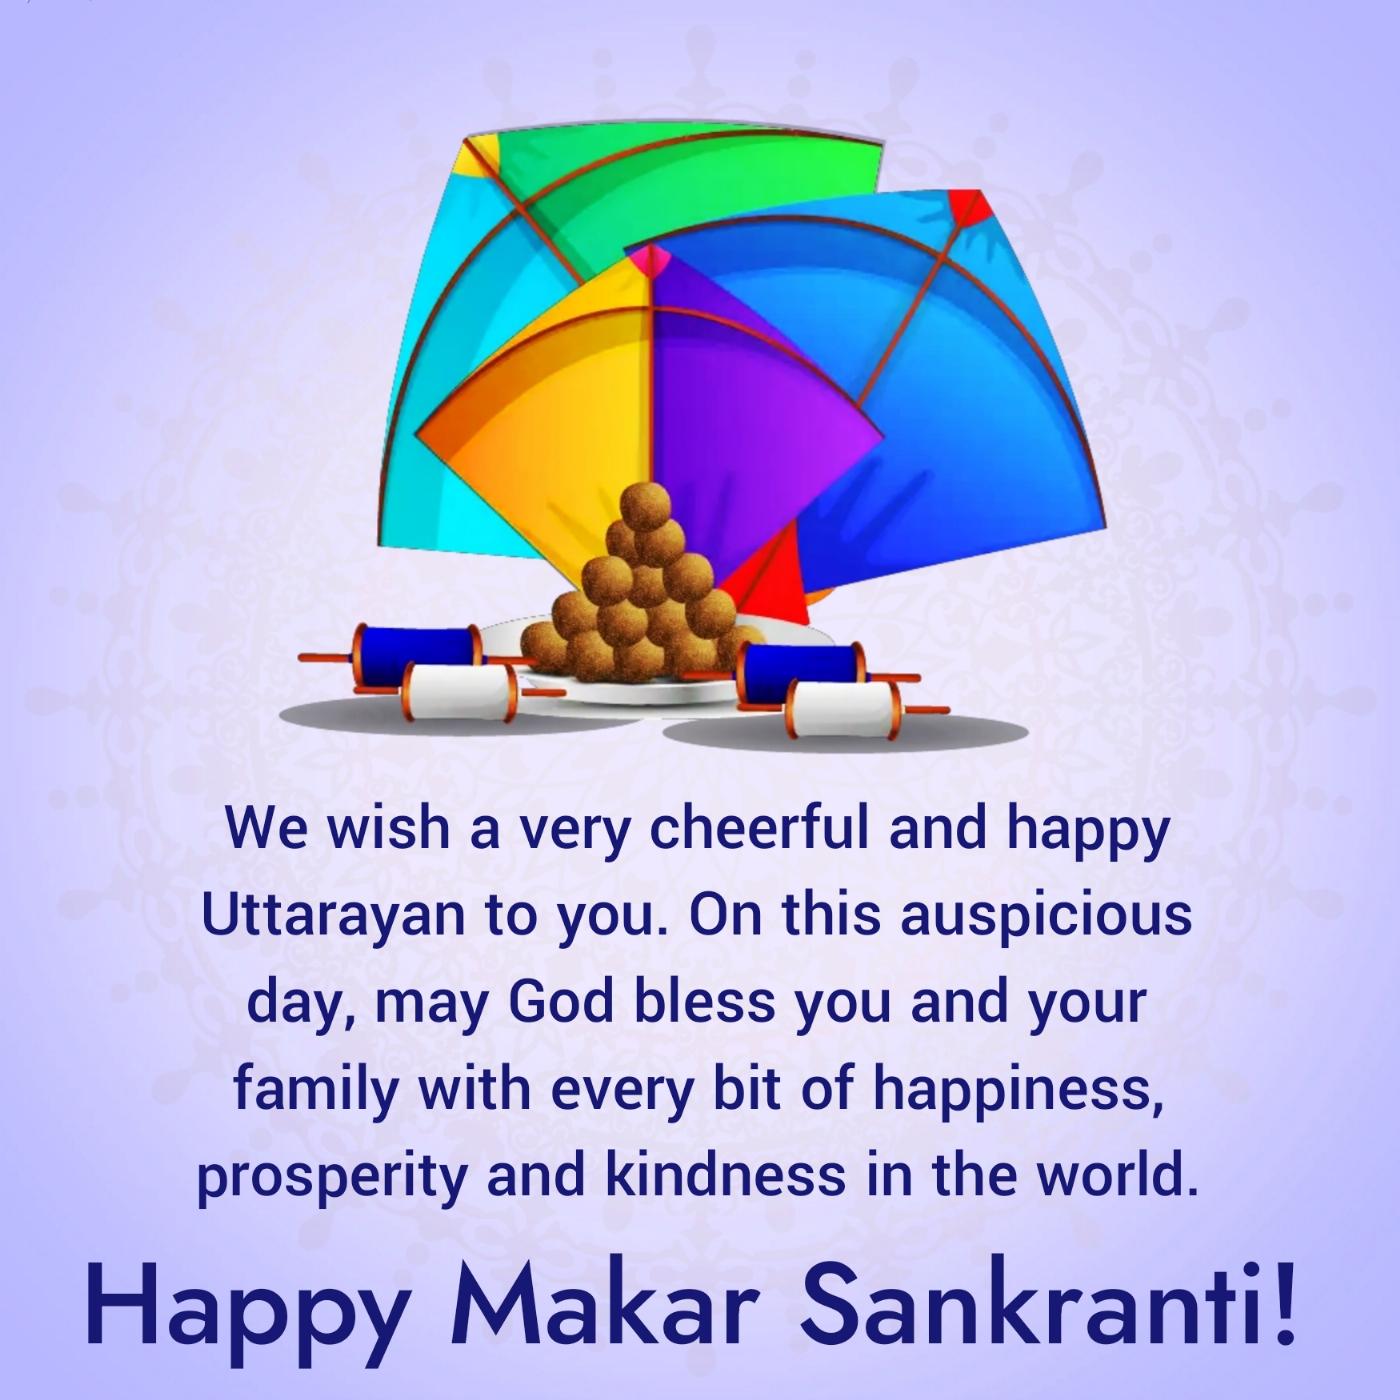 We wish a very cheerful and happy Uttarayan to you